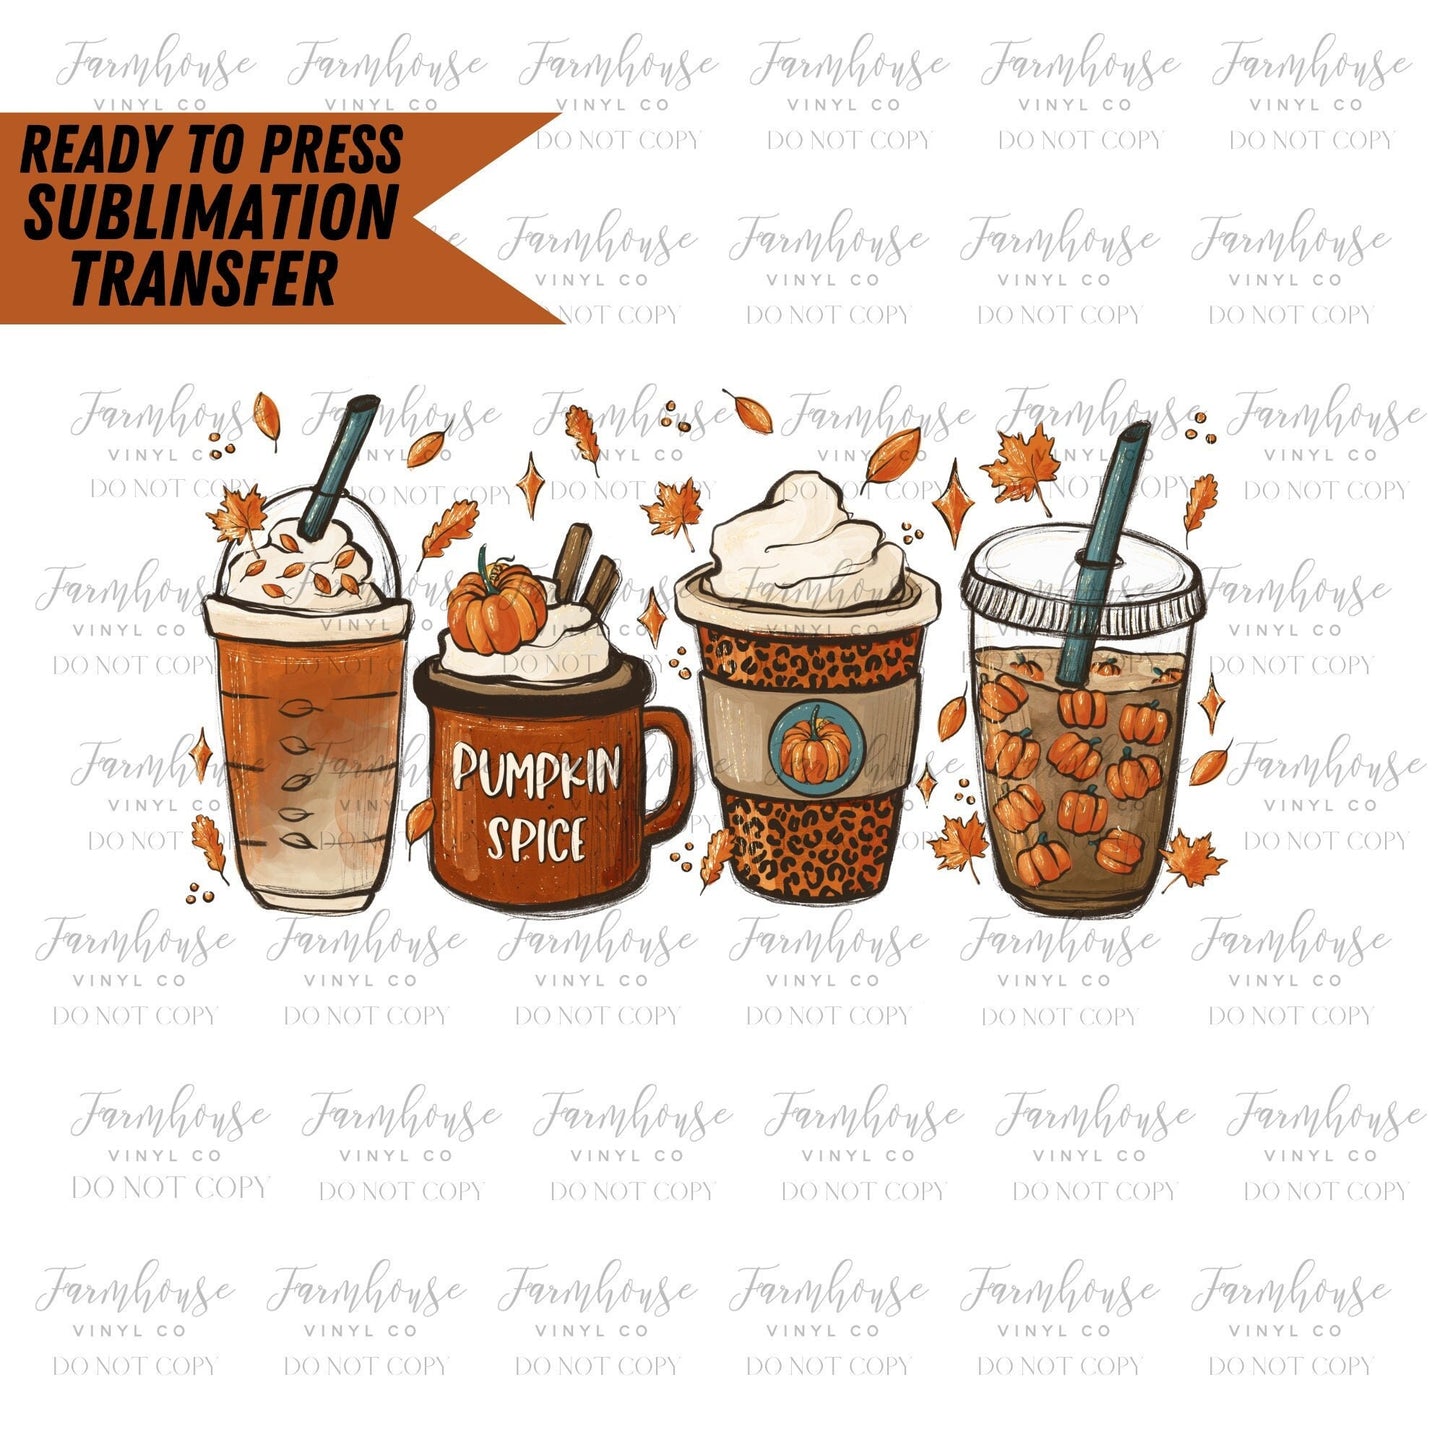 Pumpkin spice latte, Fall coffee, Ready to Press, Pumpkin Spice Latte Iced, Warm Cozy, Autumn Orange, Sublimation design, Graphic Design